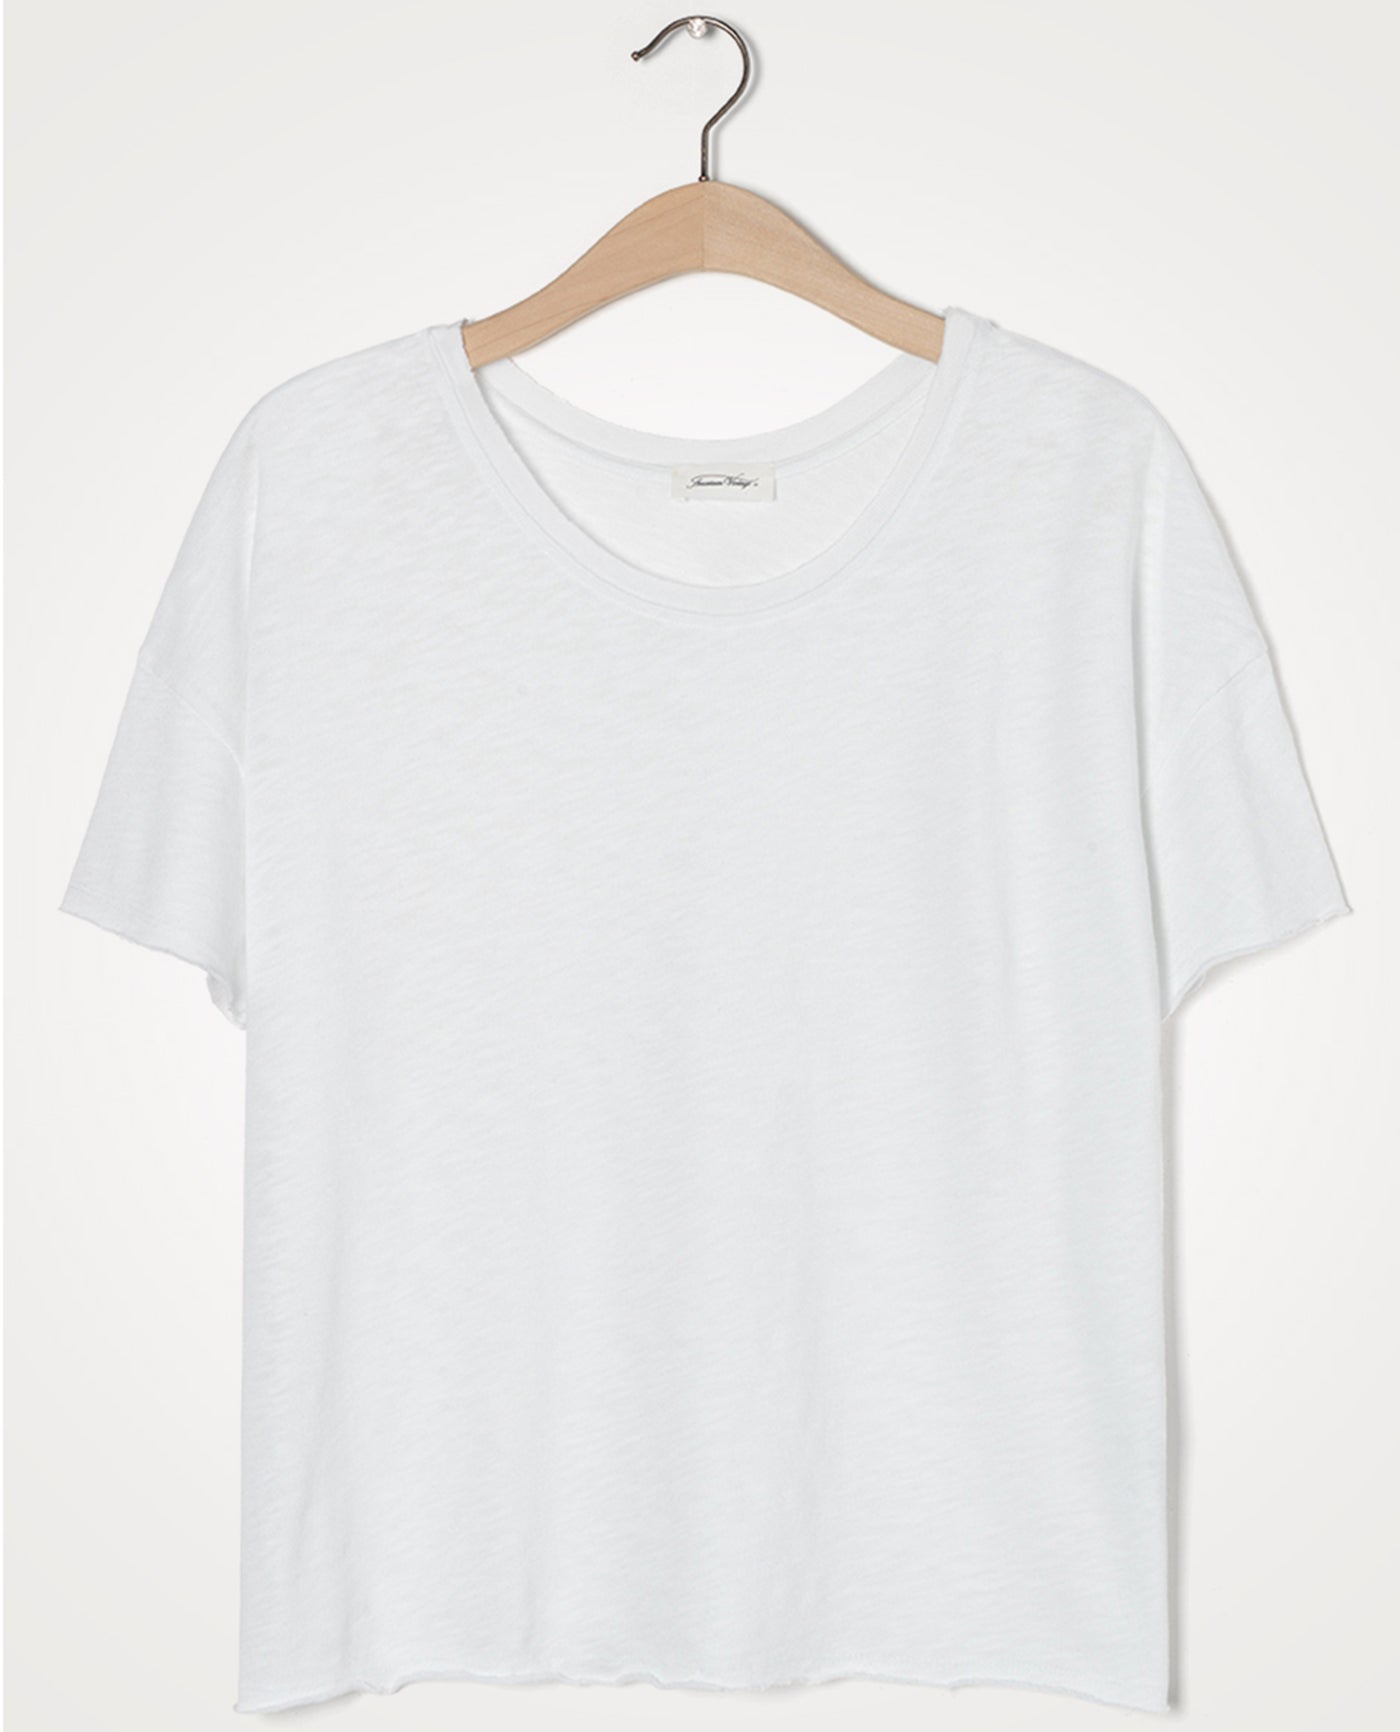 American Vintage Sonoma Short Sleeve White T-Shirt